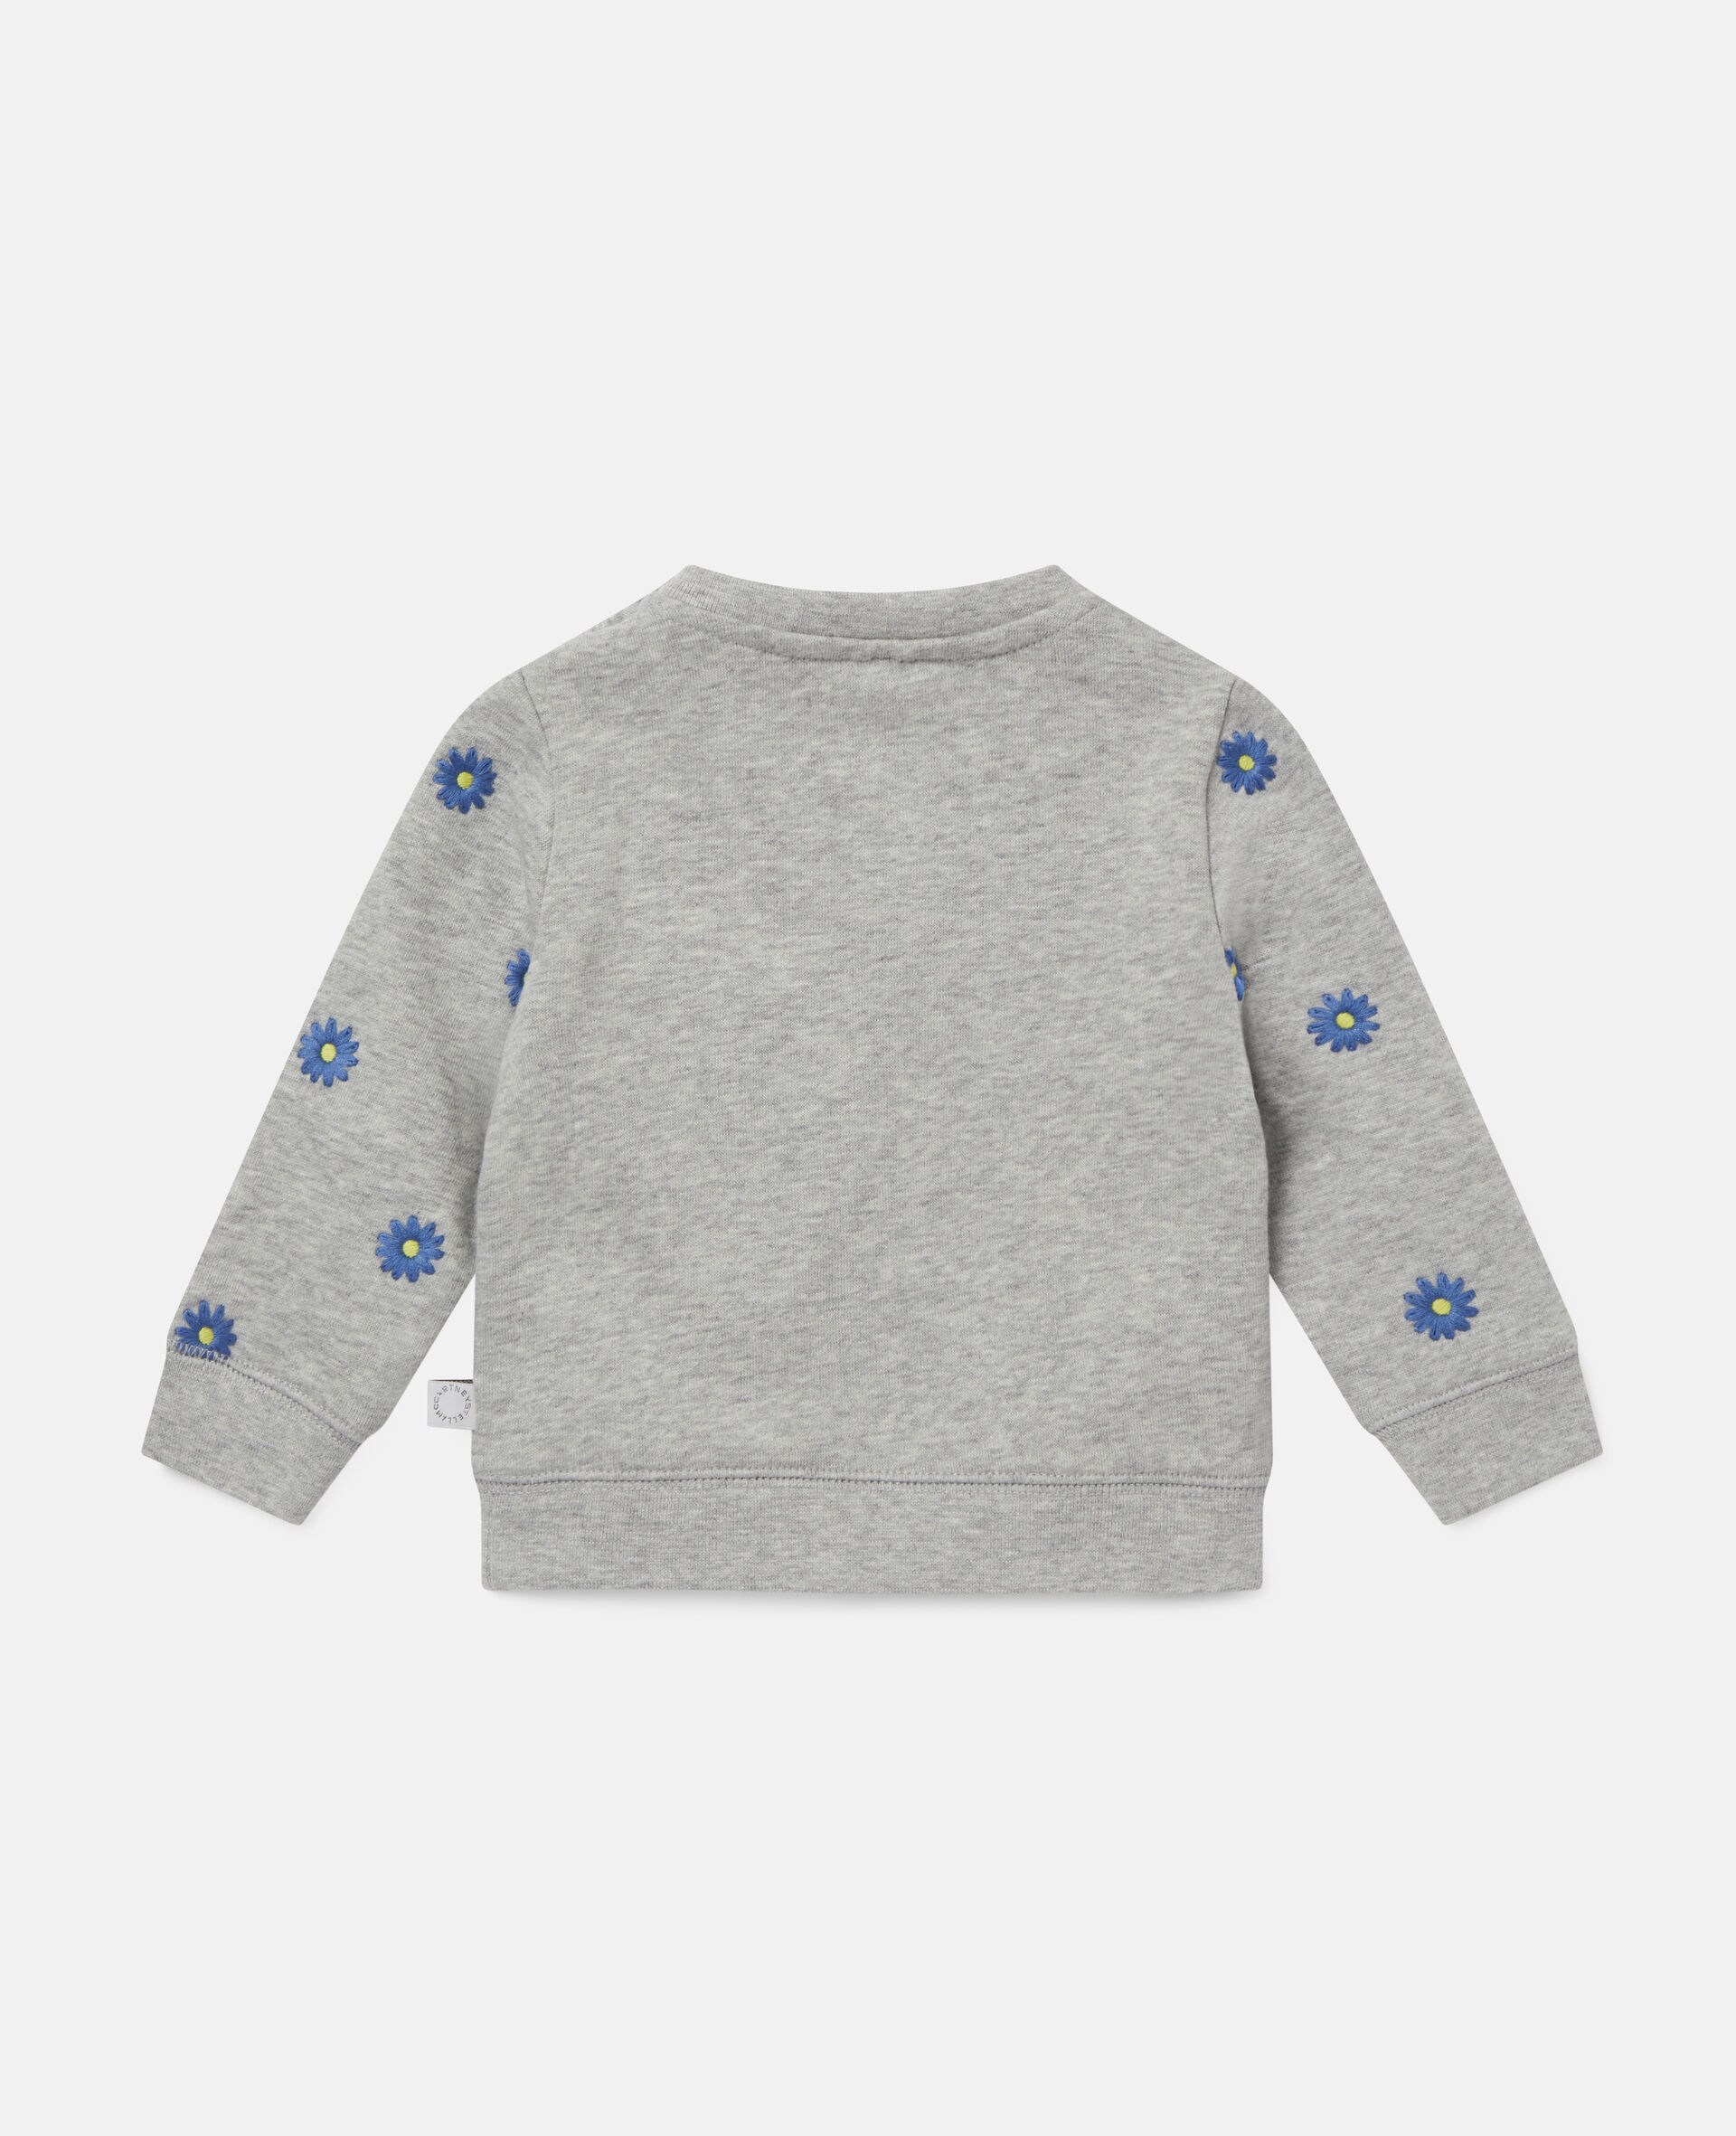 Embroidered Daisies Fleece Sweatshirt -Grey-large image number 3